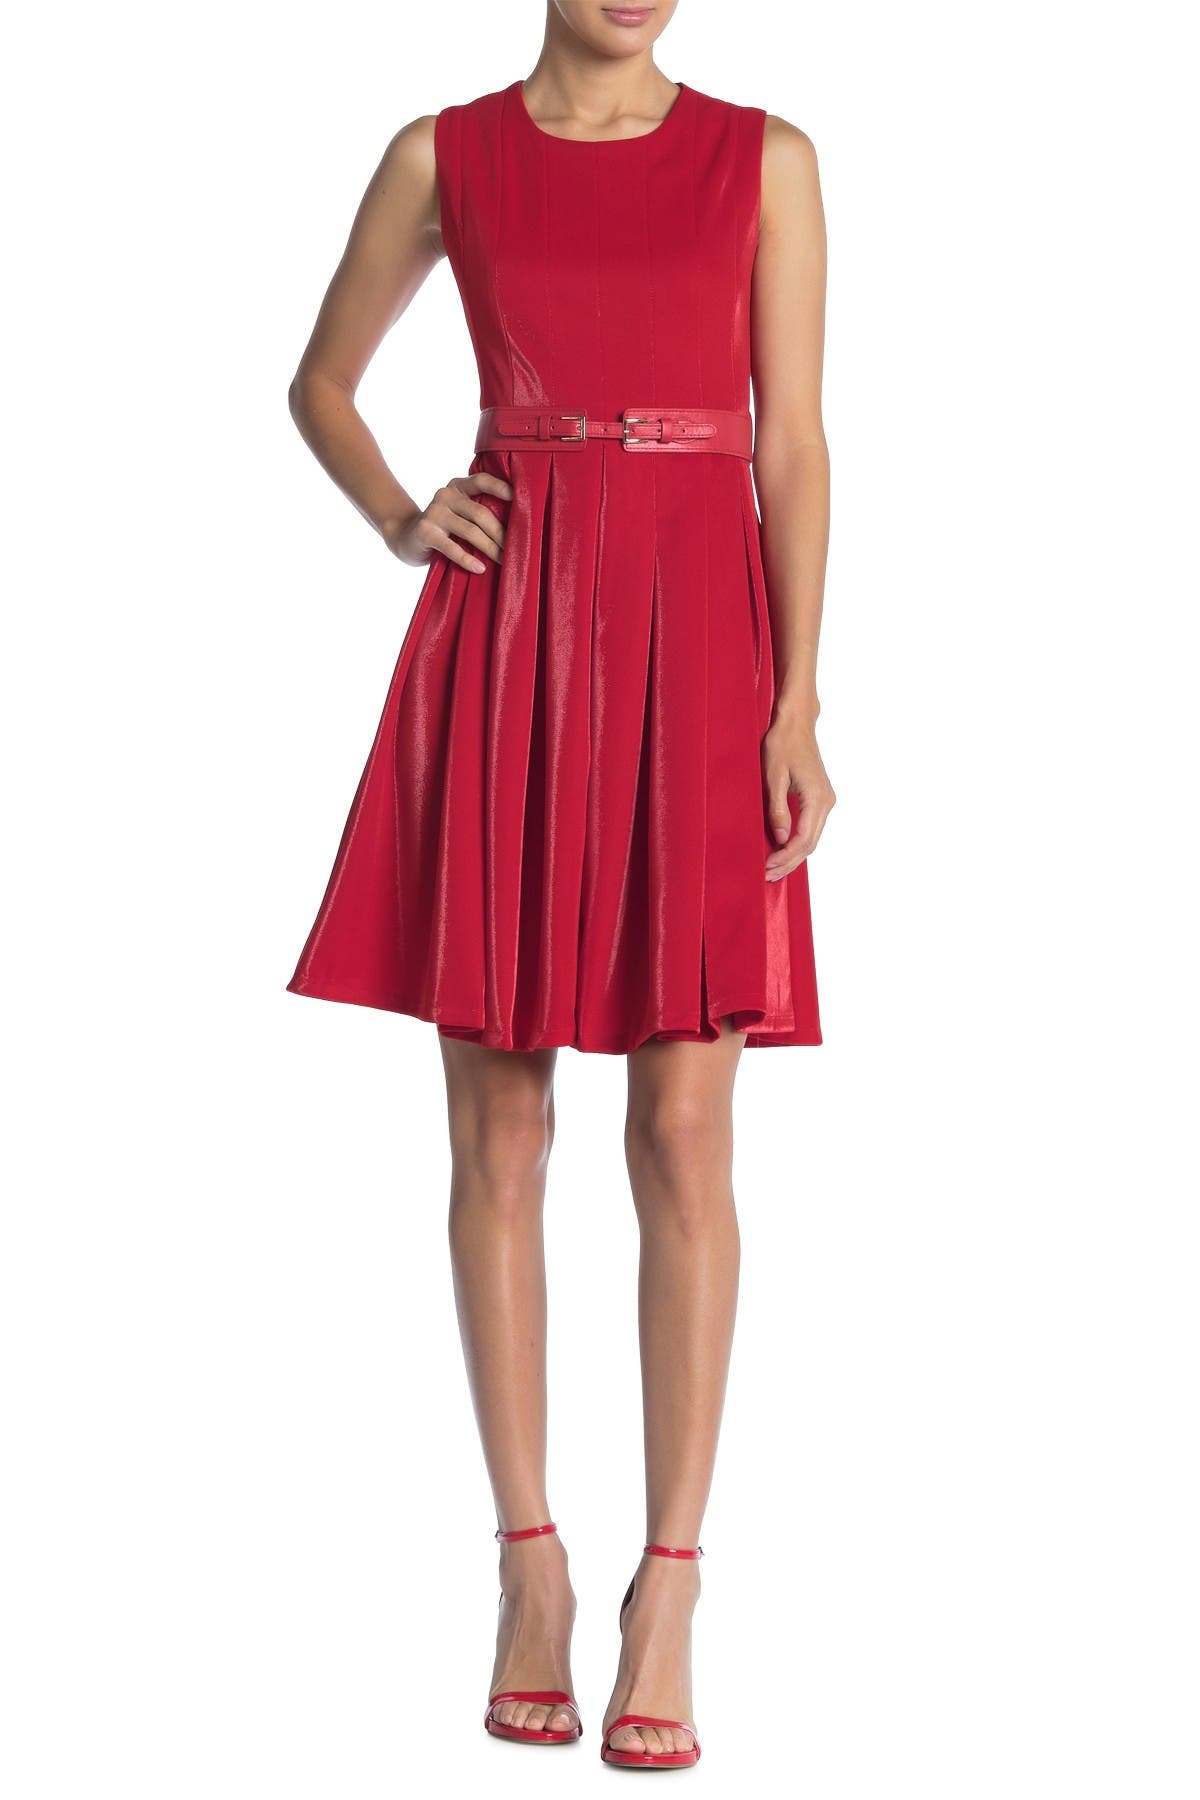 gracia red dress